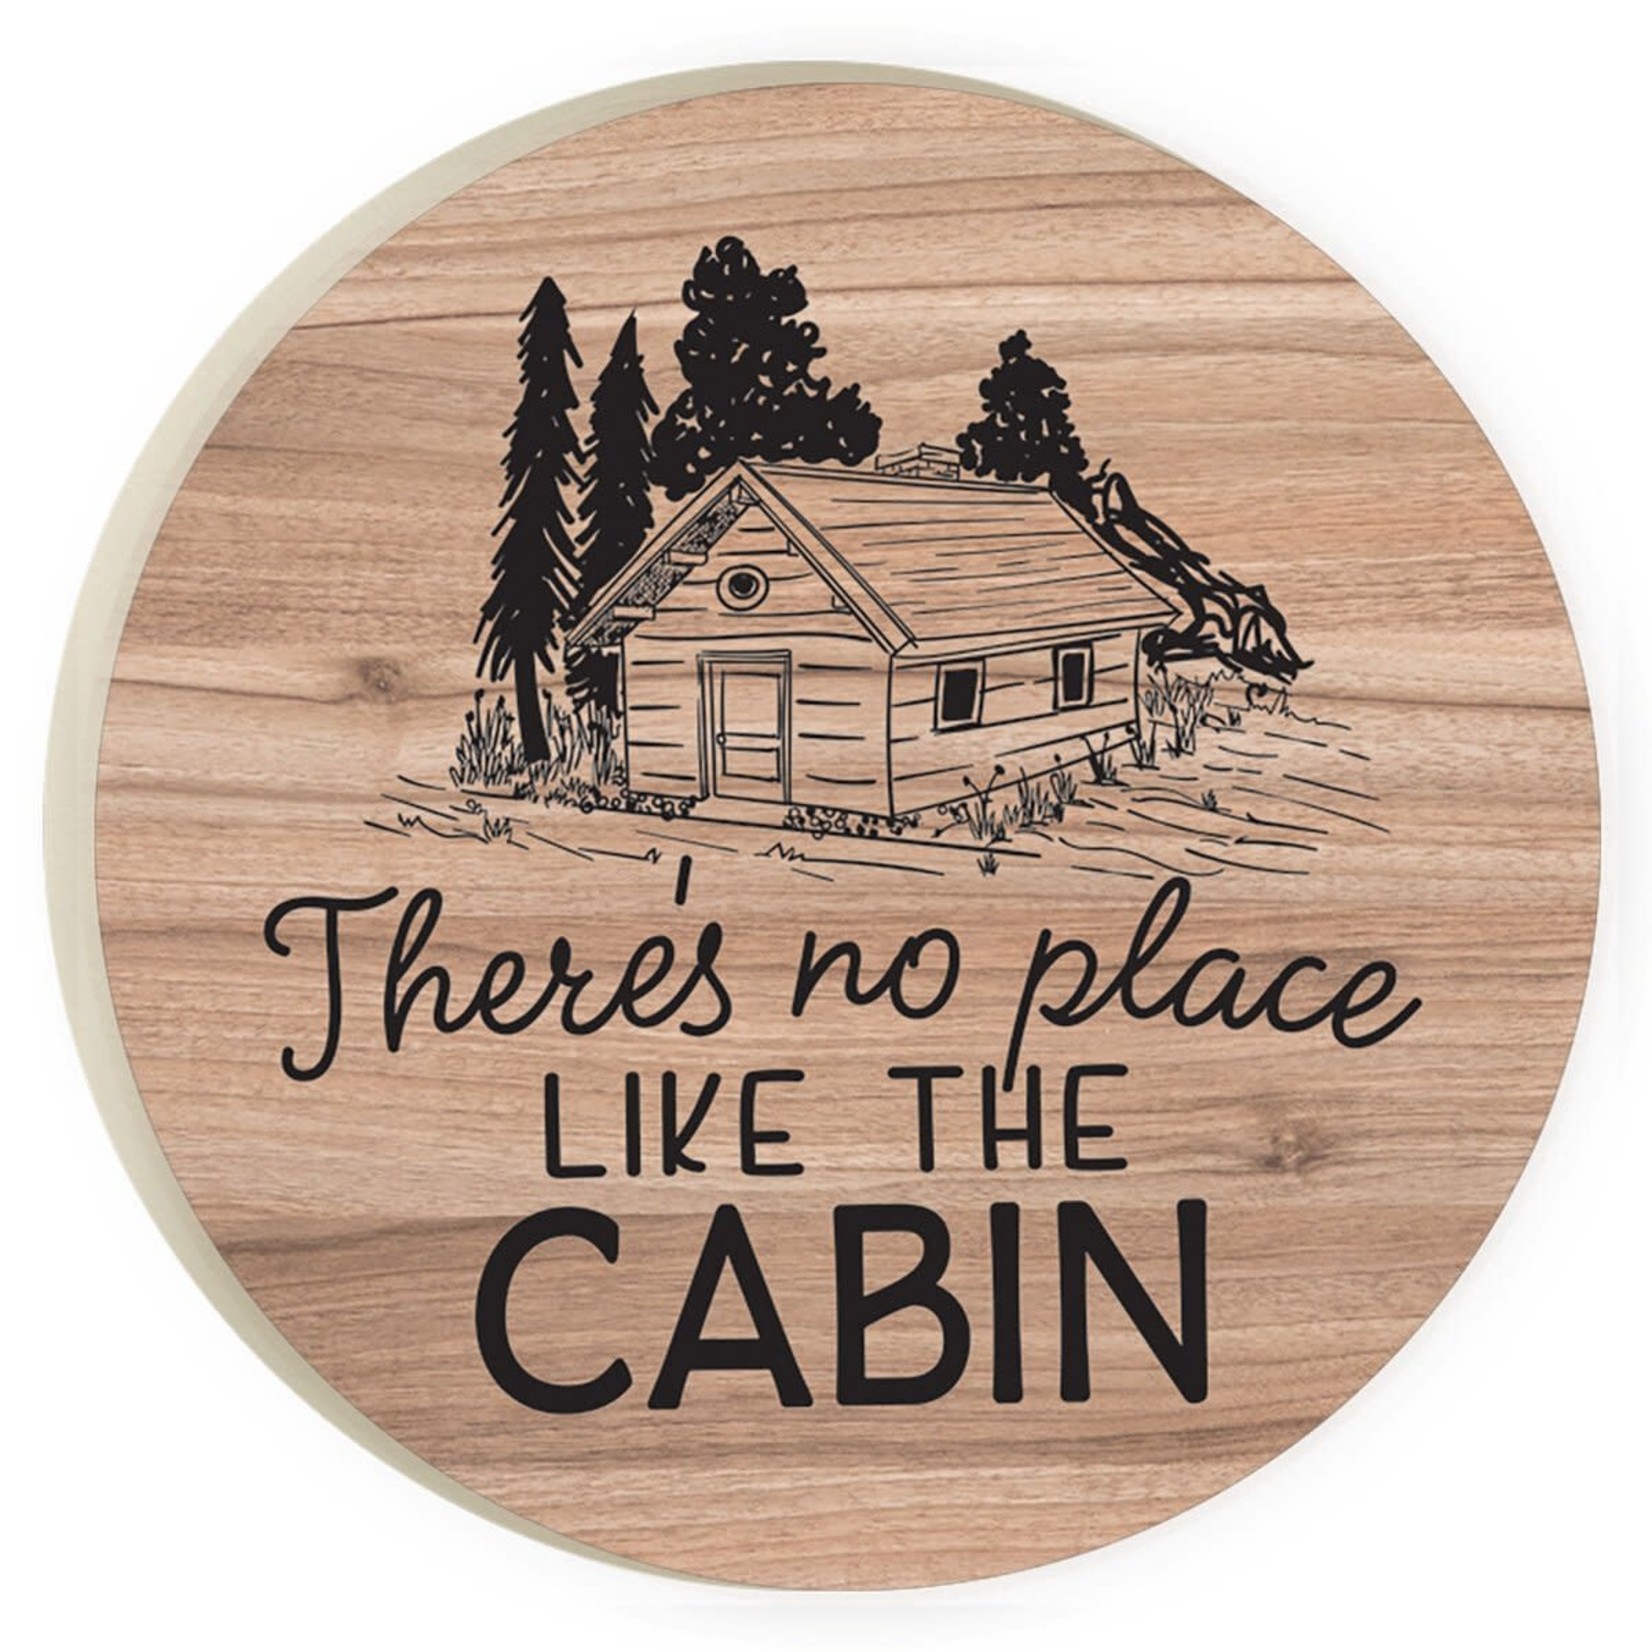 No place like cabin coaster